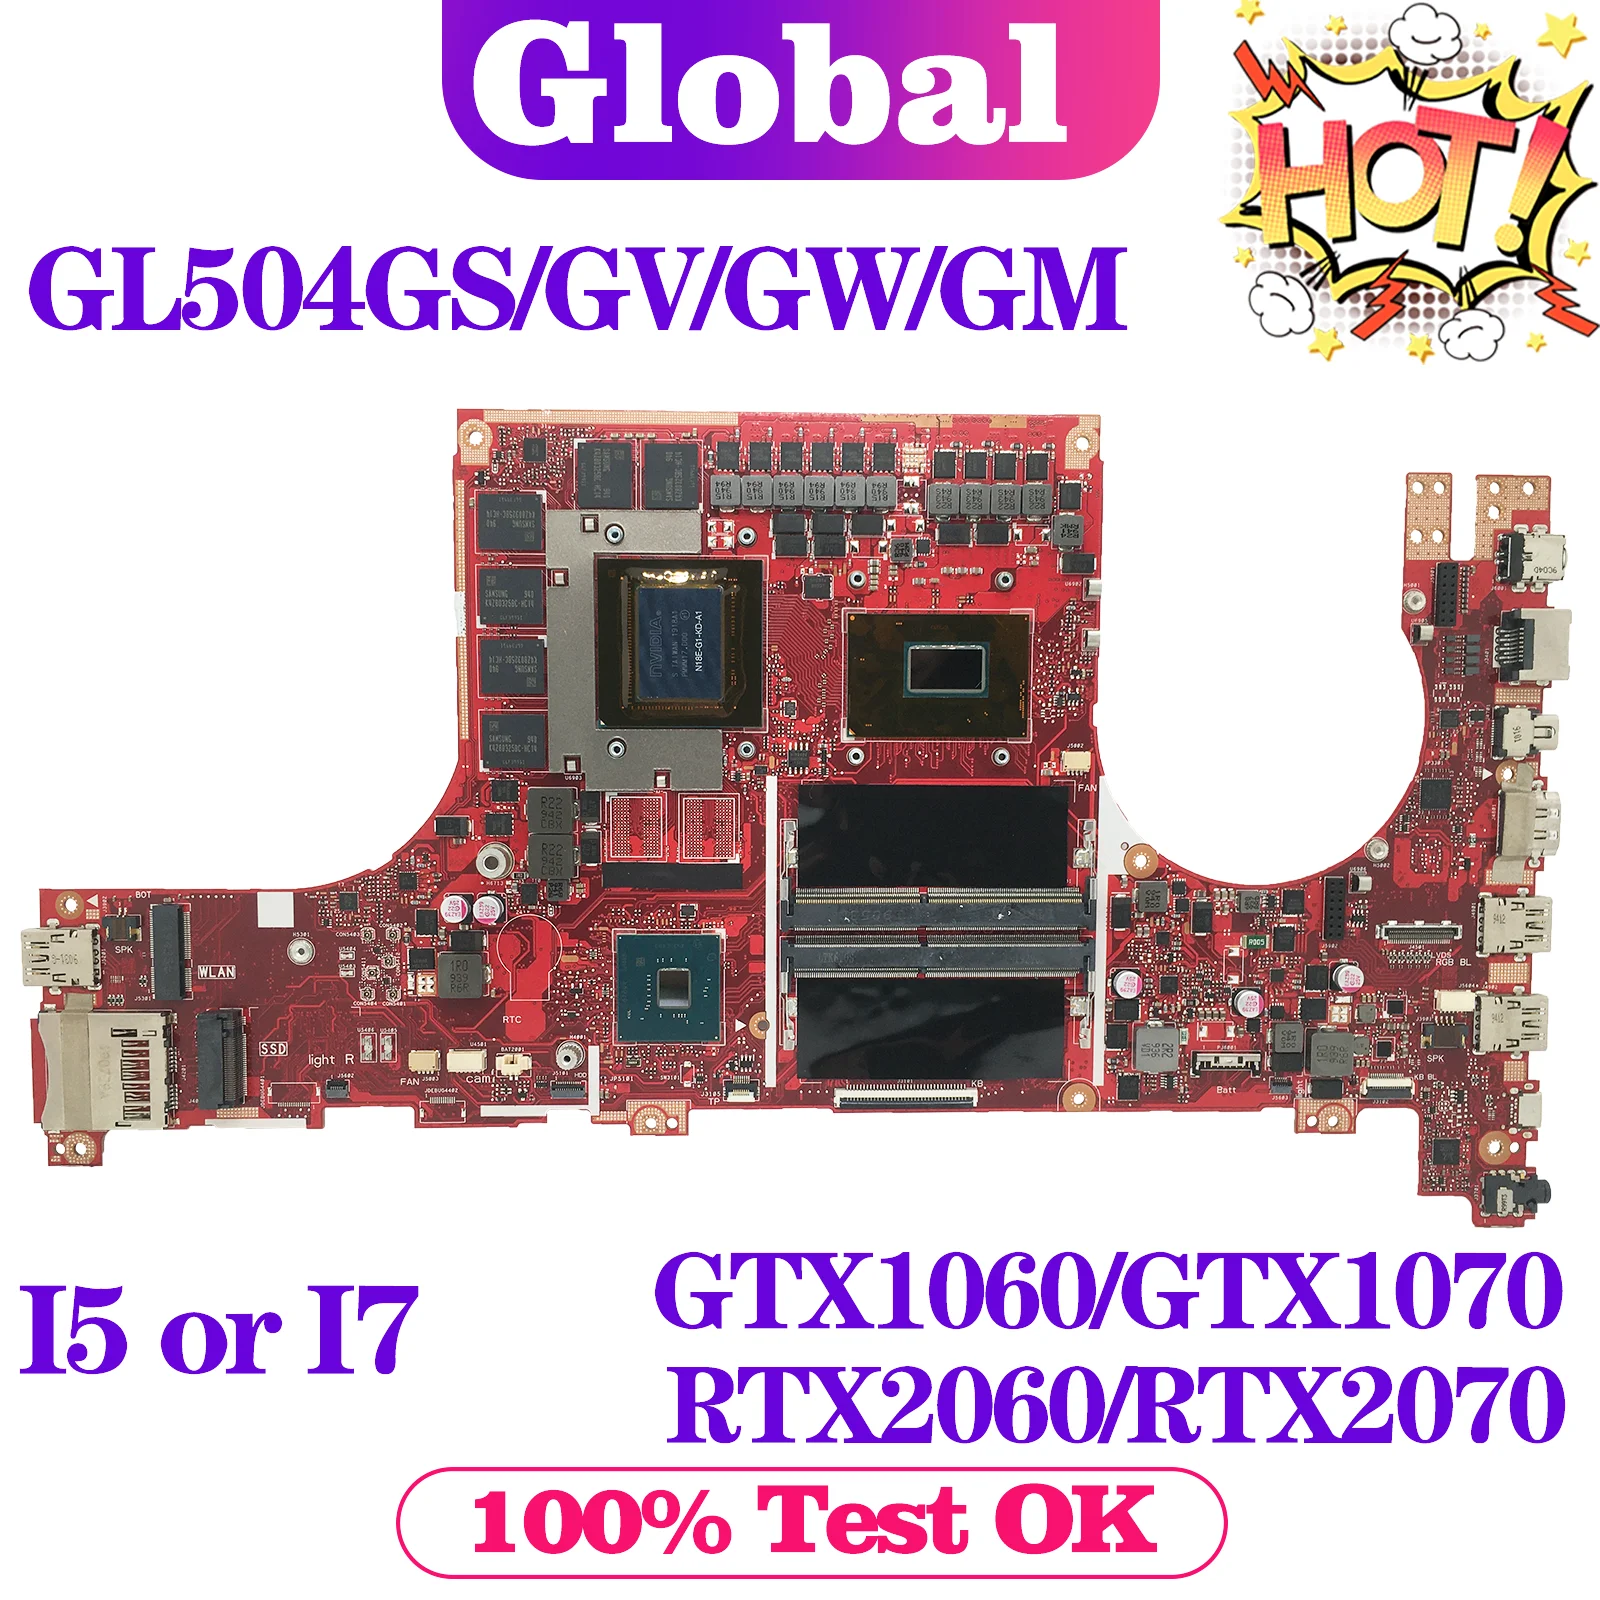 

KEFU GL504G Mainboard For ASUS GL504GS GL504GW GL504GV GL504GM S5C Laptop Motherboard W/i5 i7 GTX1060 GTX1070 RTX2070 RTX2060